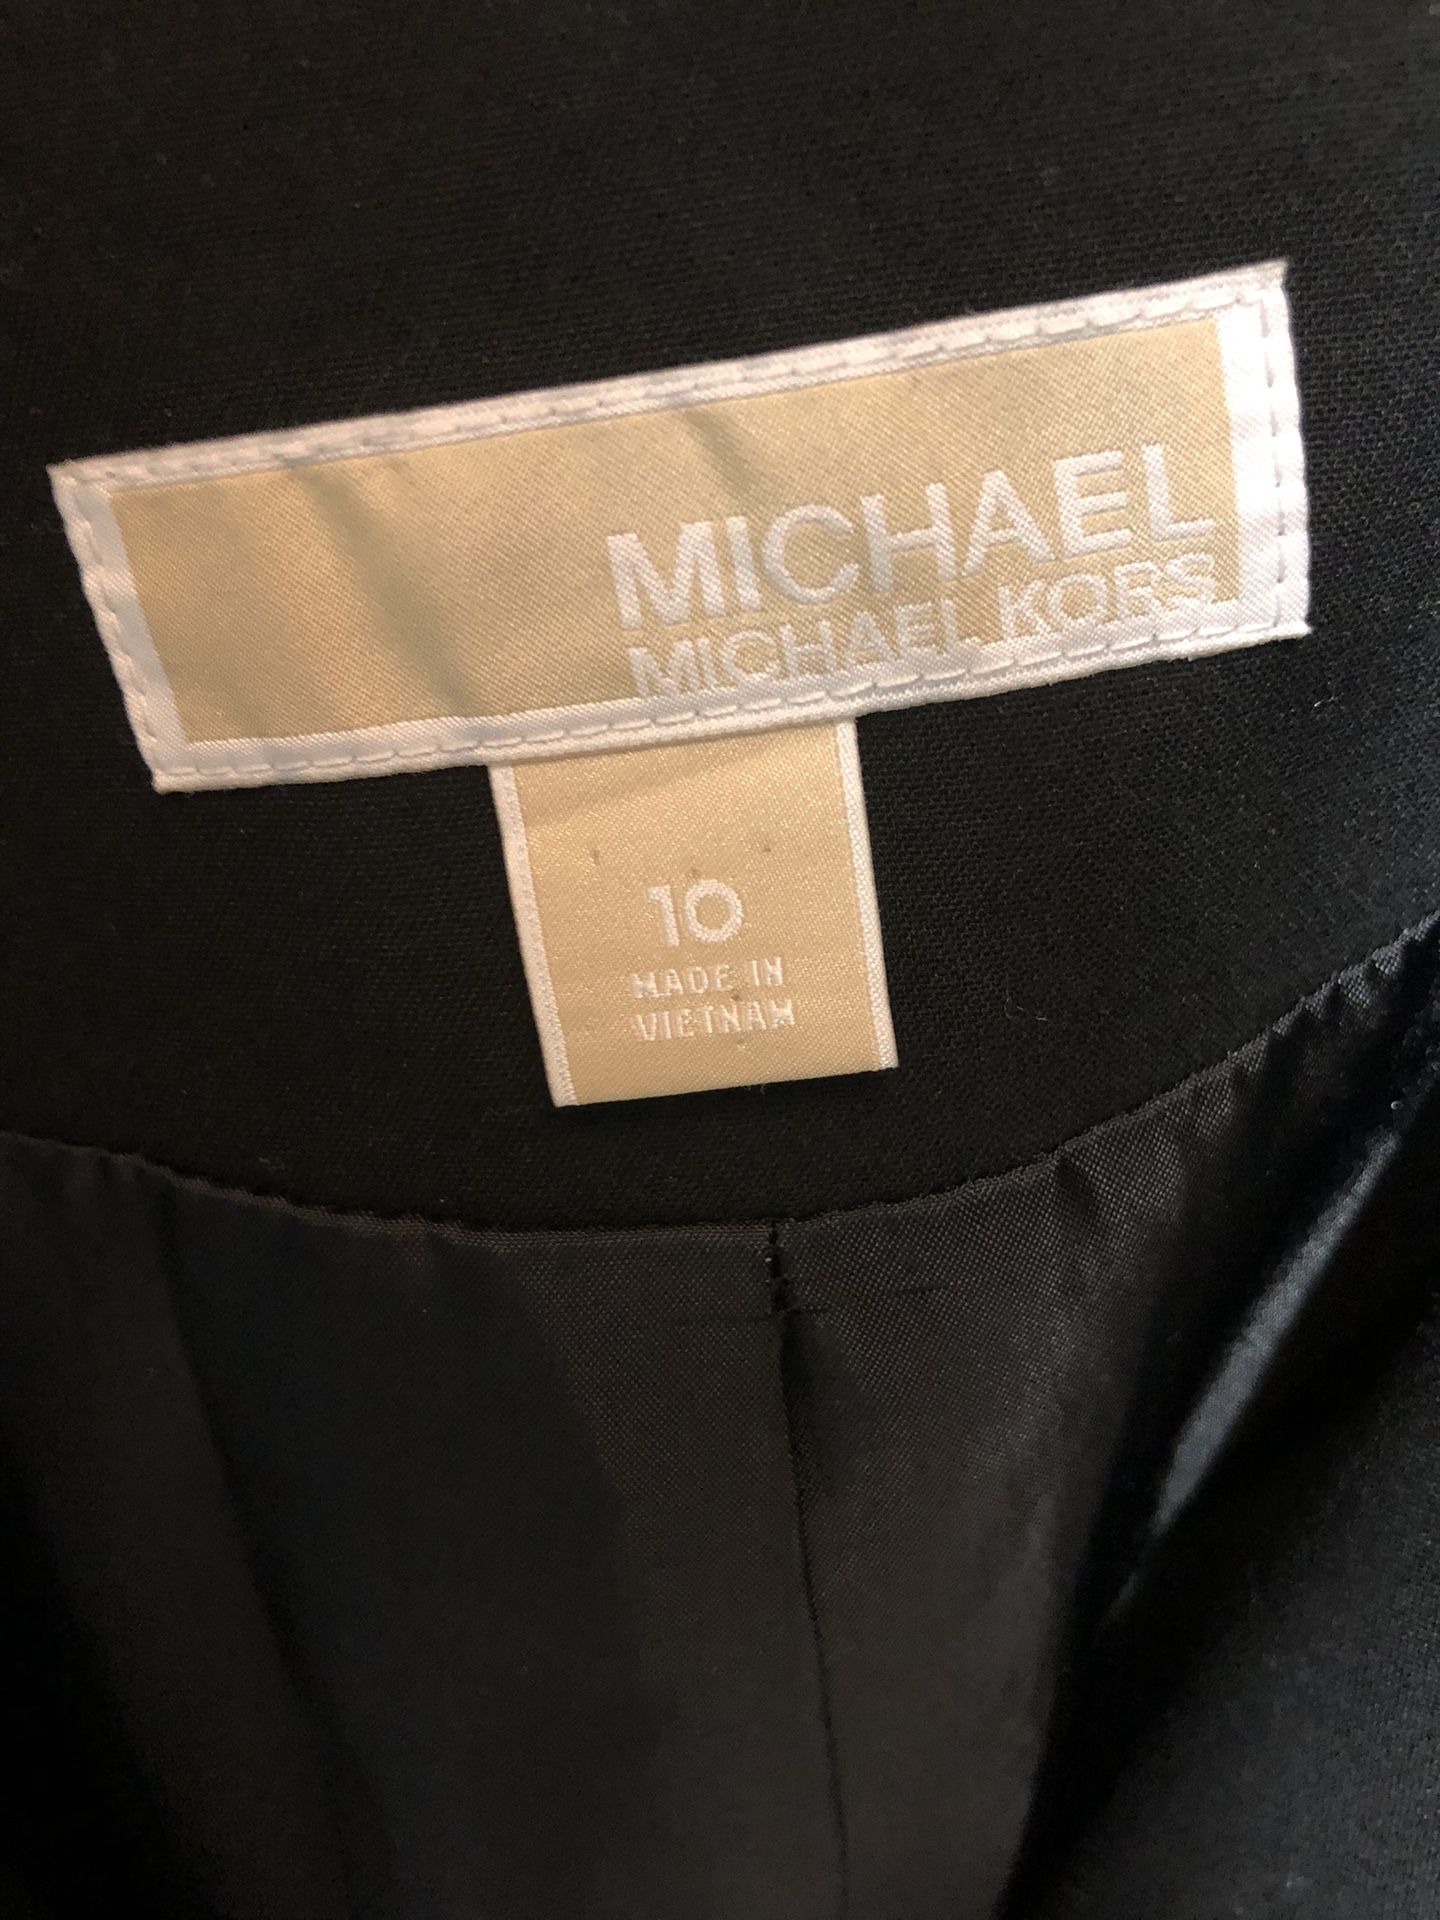 Three Size 10 Women’s Black Jackets Designer Names Each $10